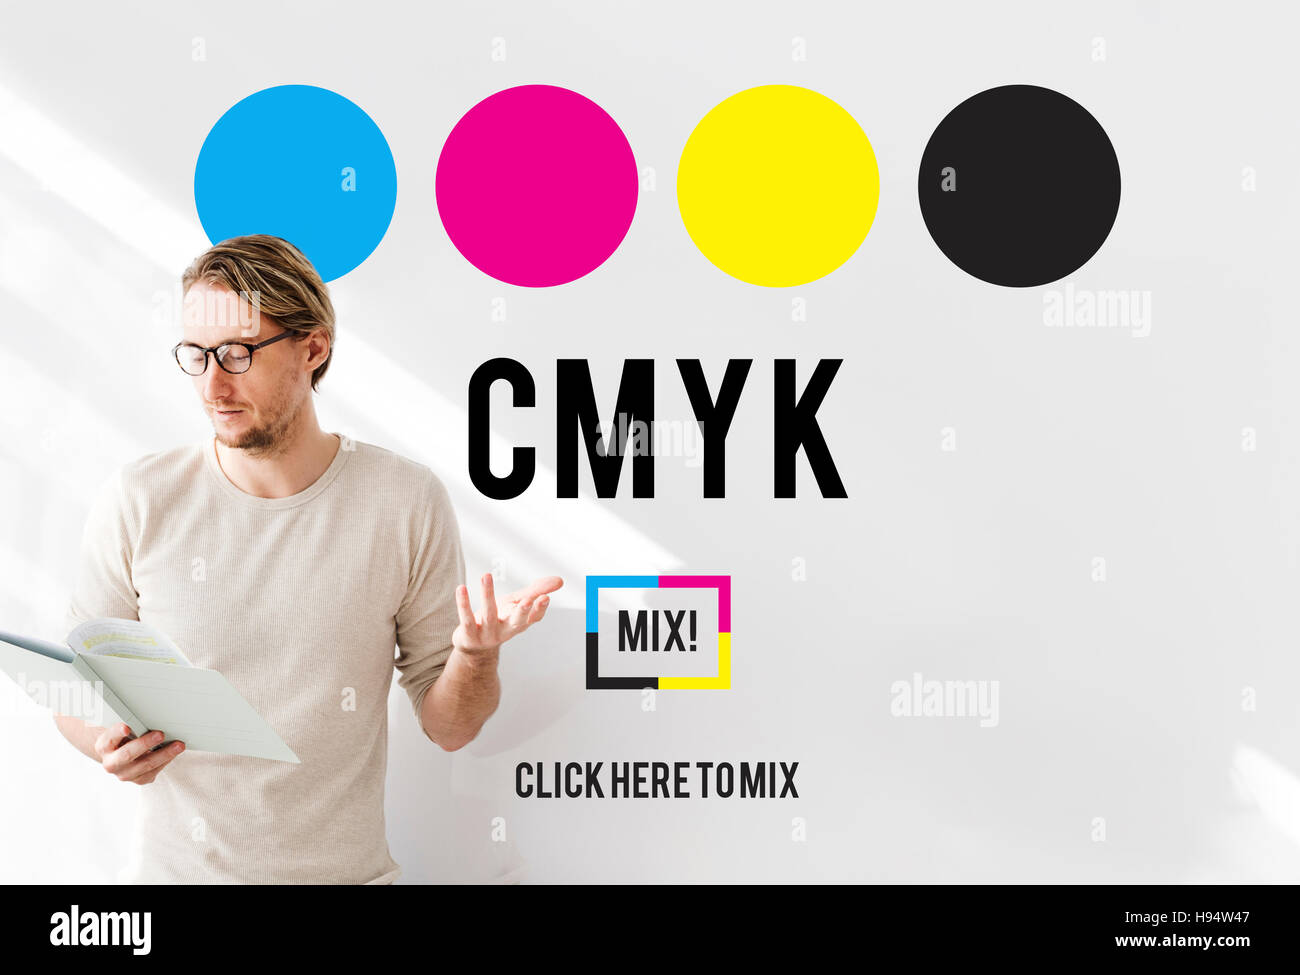 CMYK Cyan Magenta Yellow Key Color Printing Process Concept Stock Photo